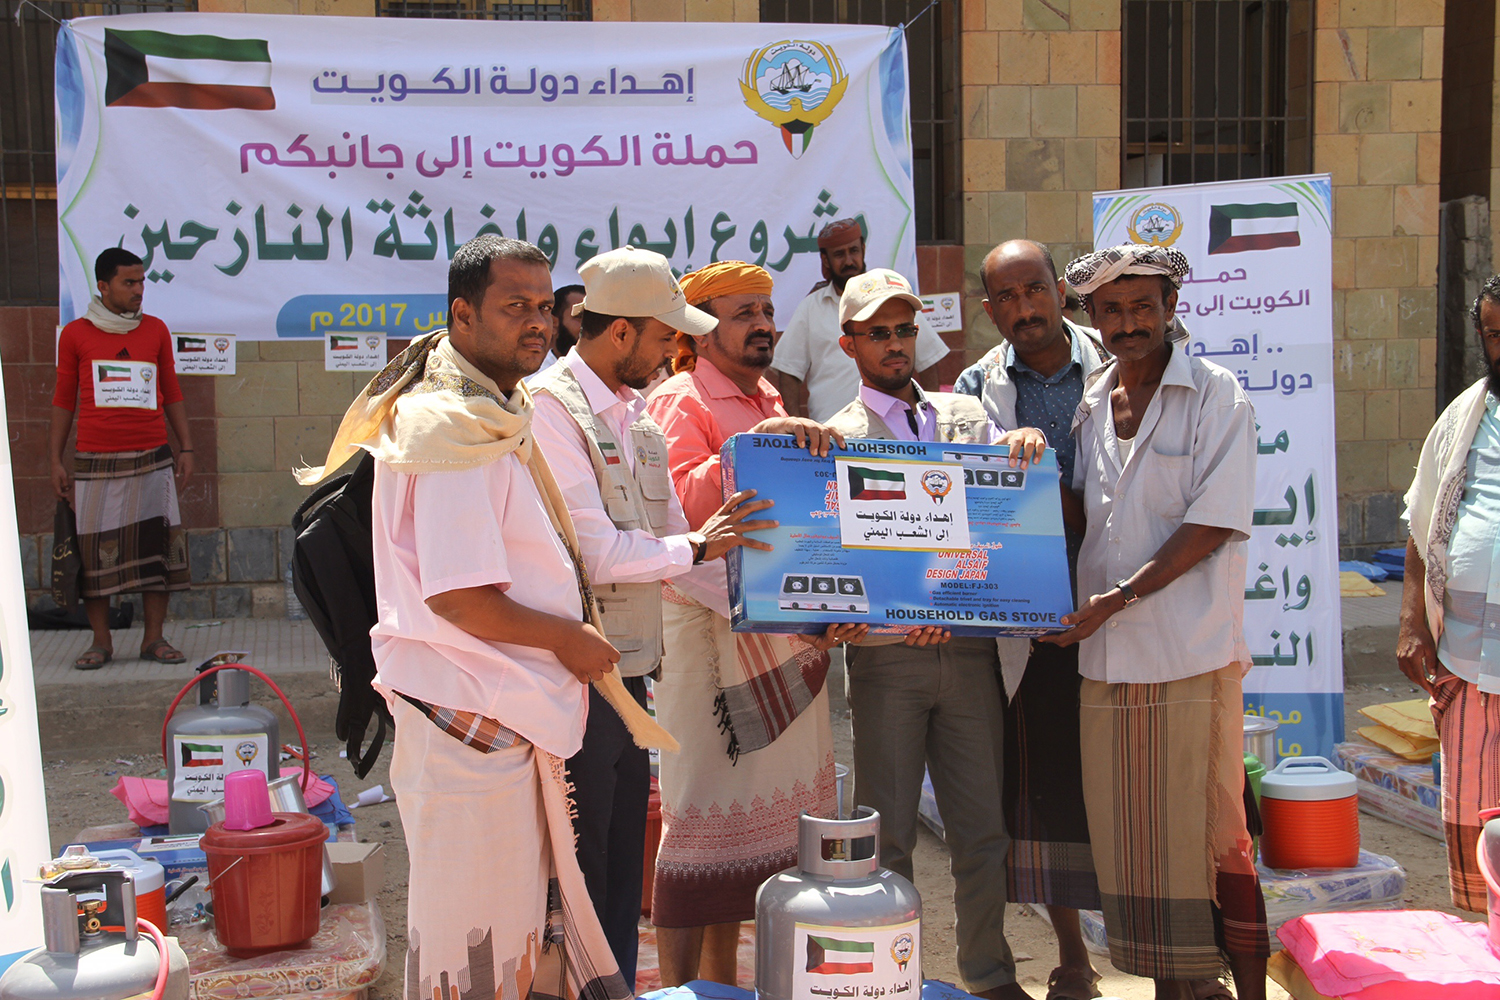 Kuwait continues relief aid in Yemen